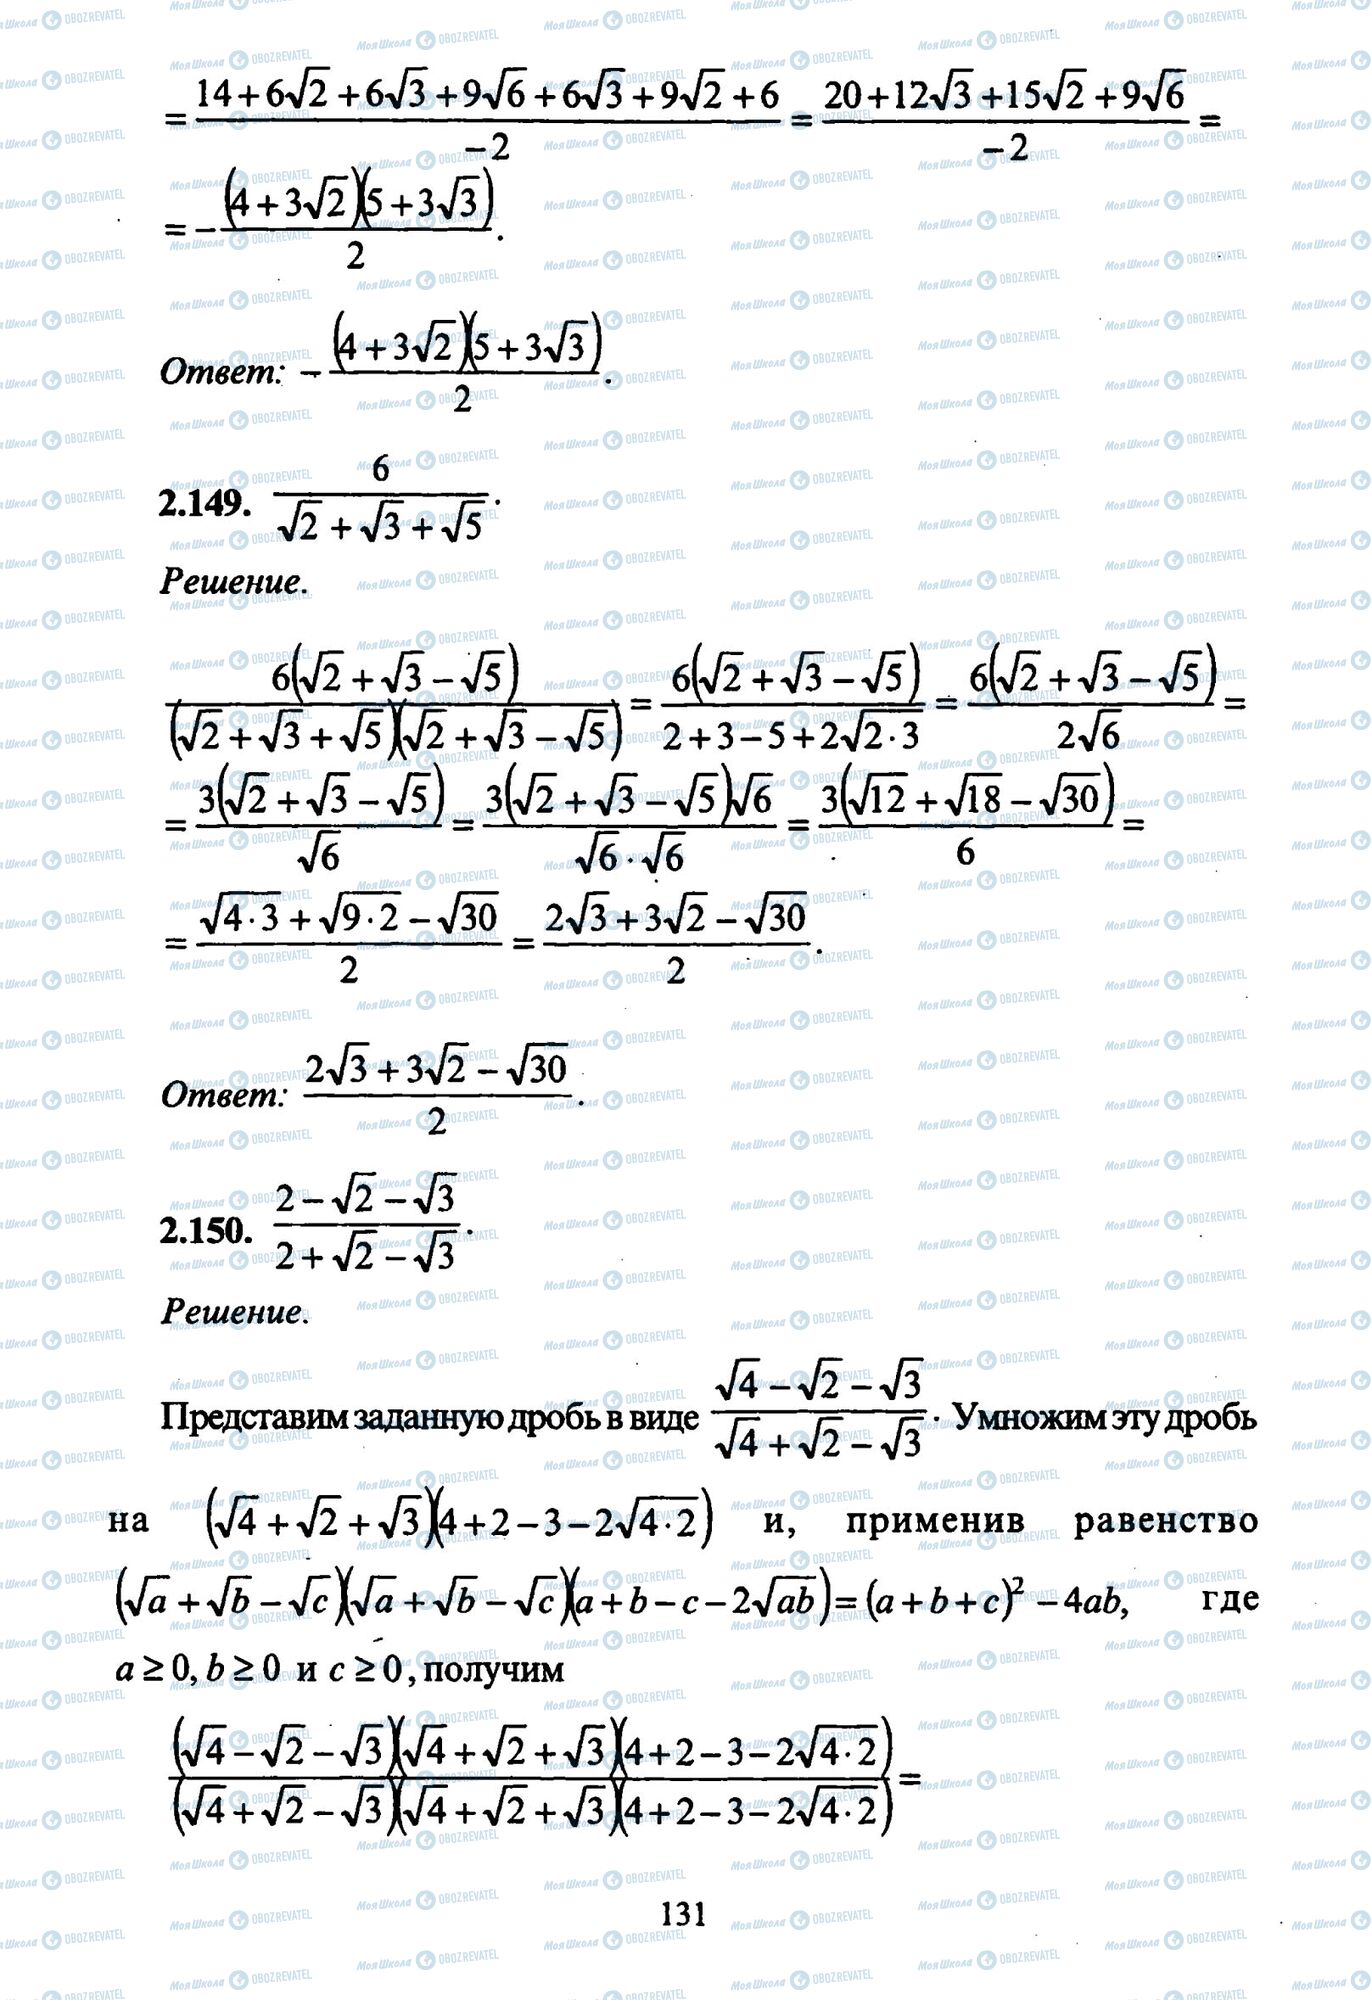 ЗНО Математика 11 класс страница 149-150